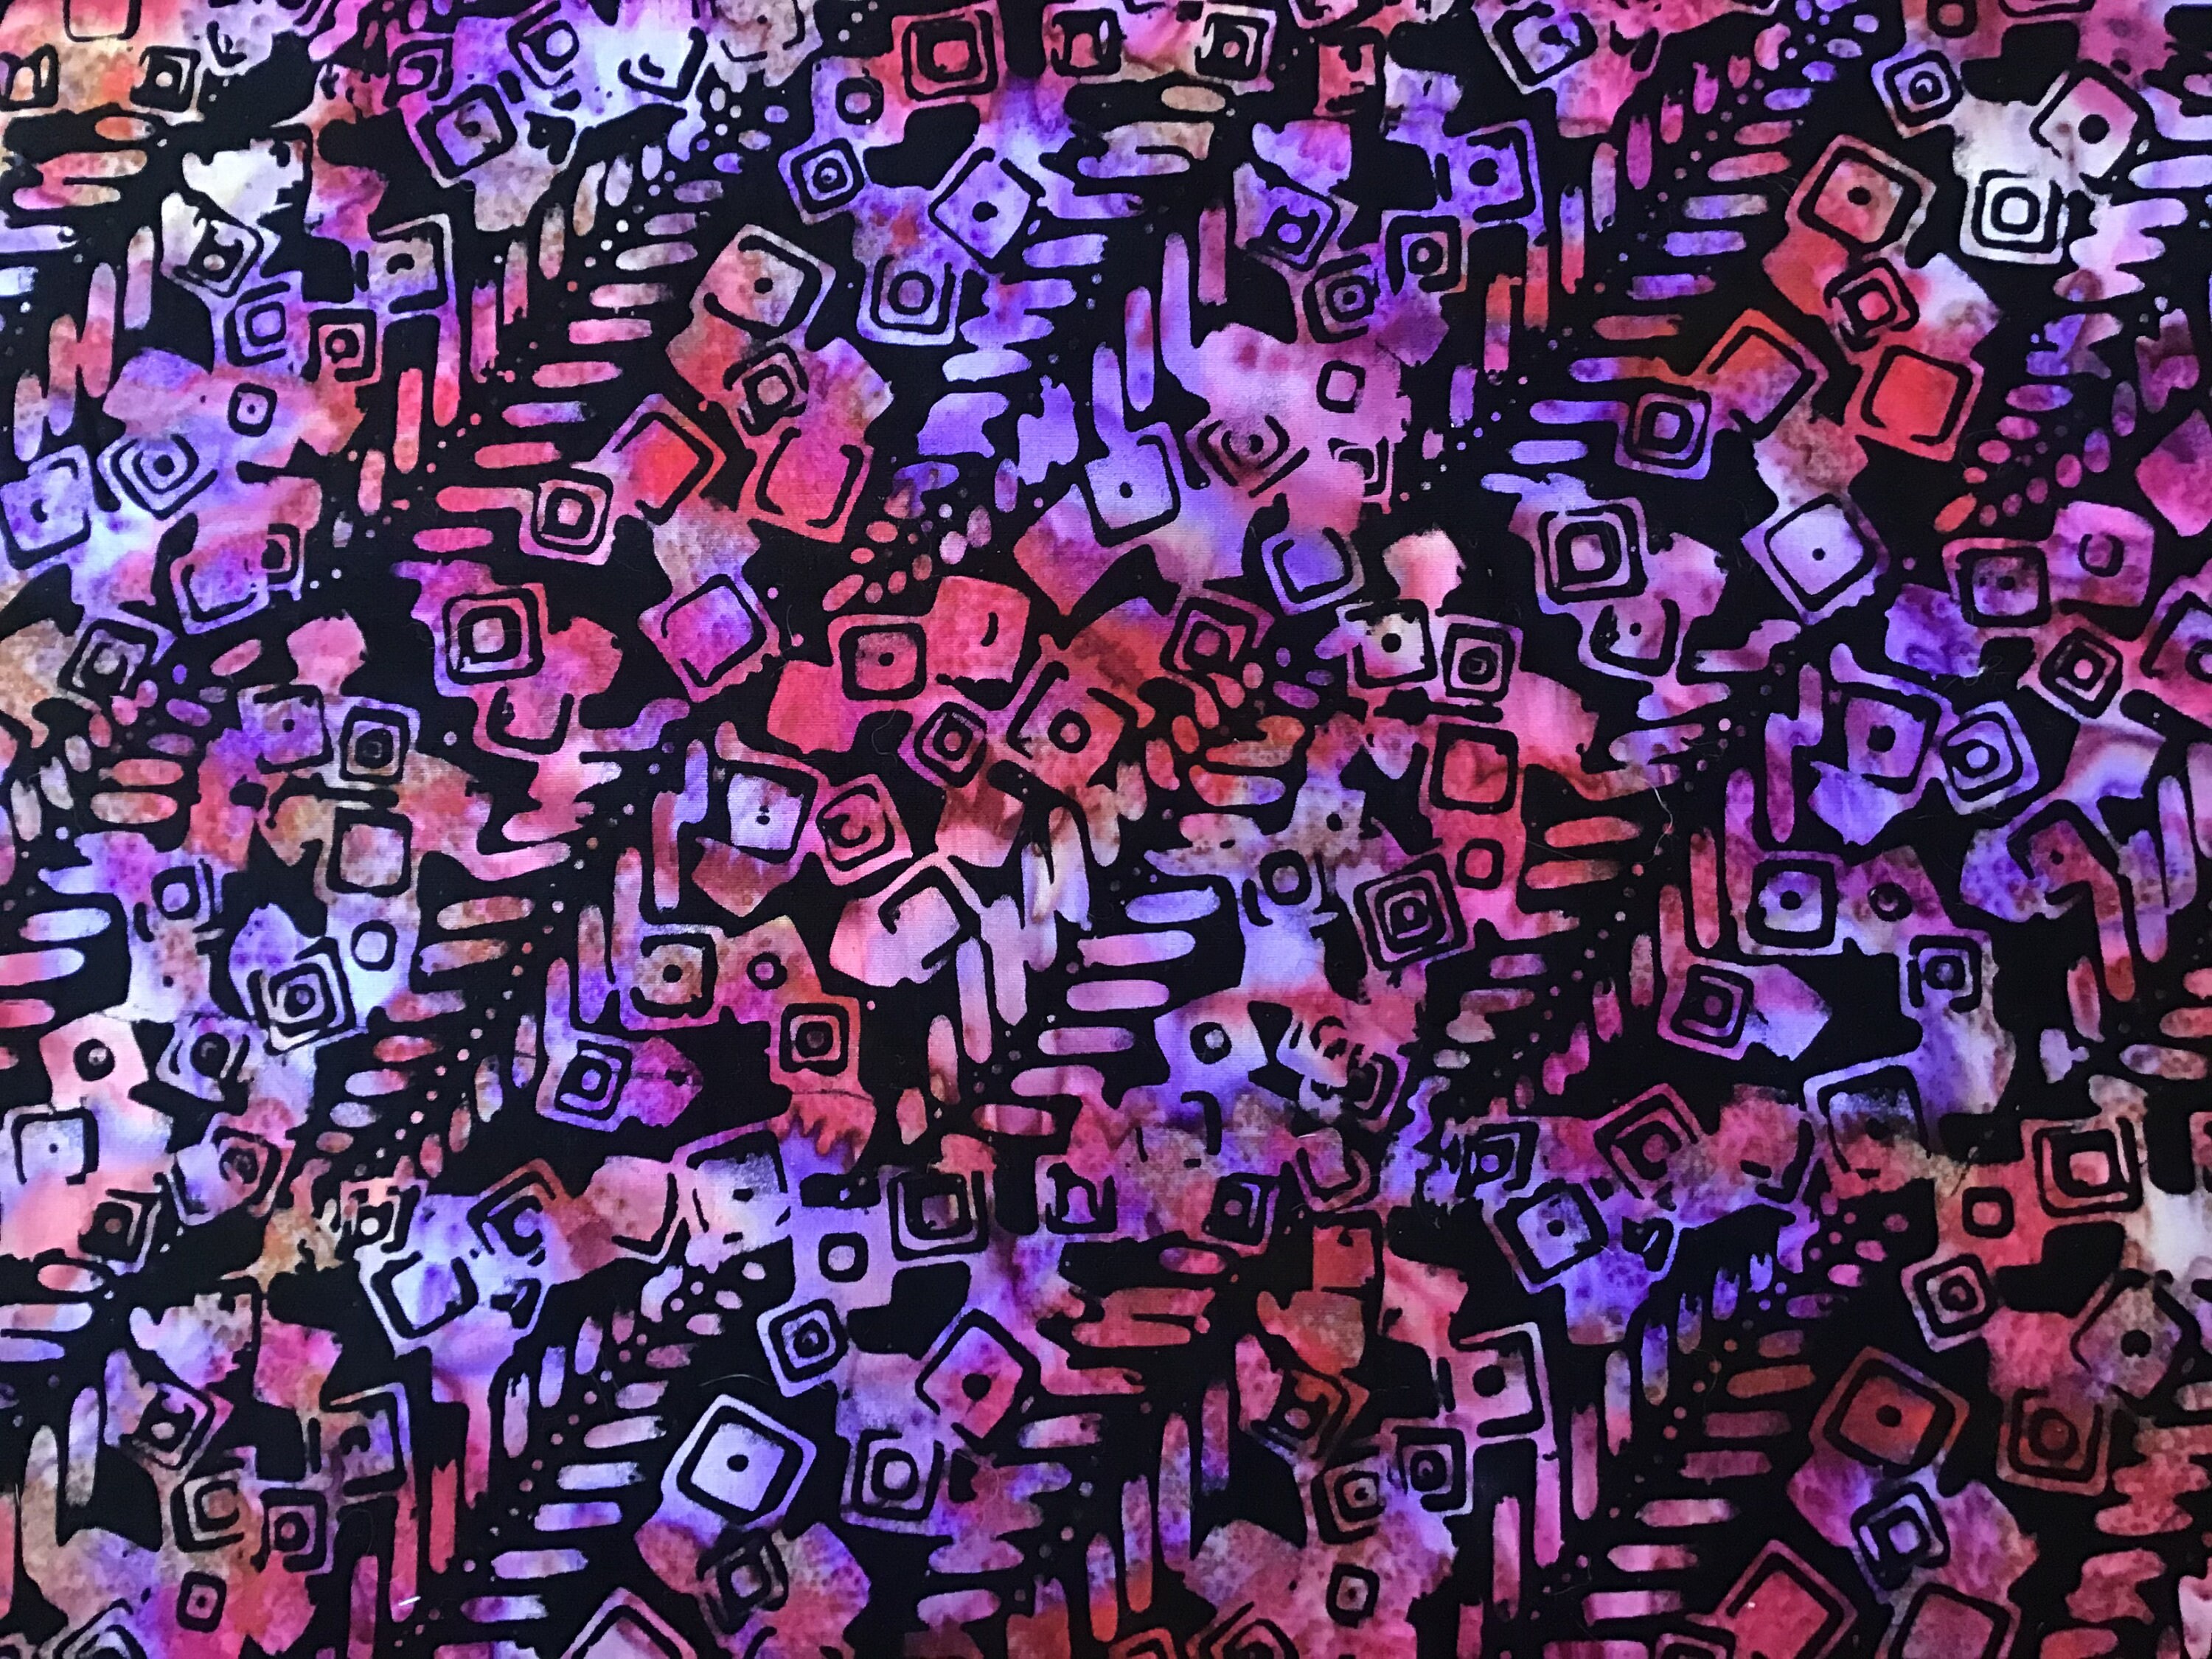 Colorful Batik Cotton Fabric 1/2 yard Purples Pinks & Black | Etsy